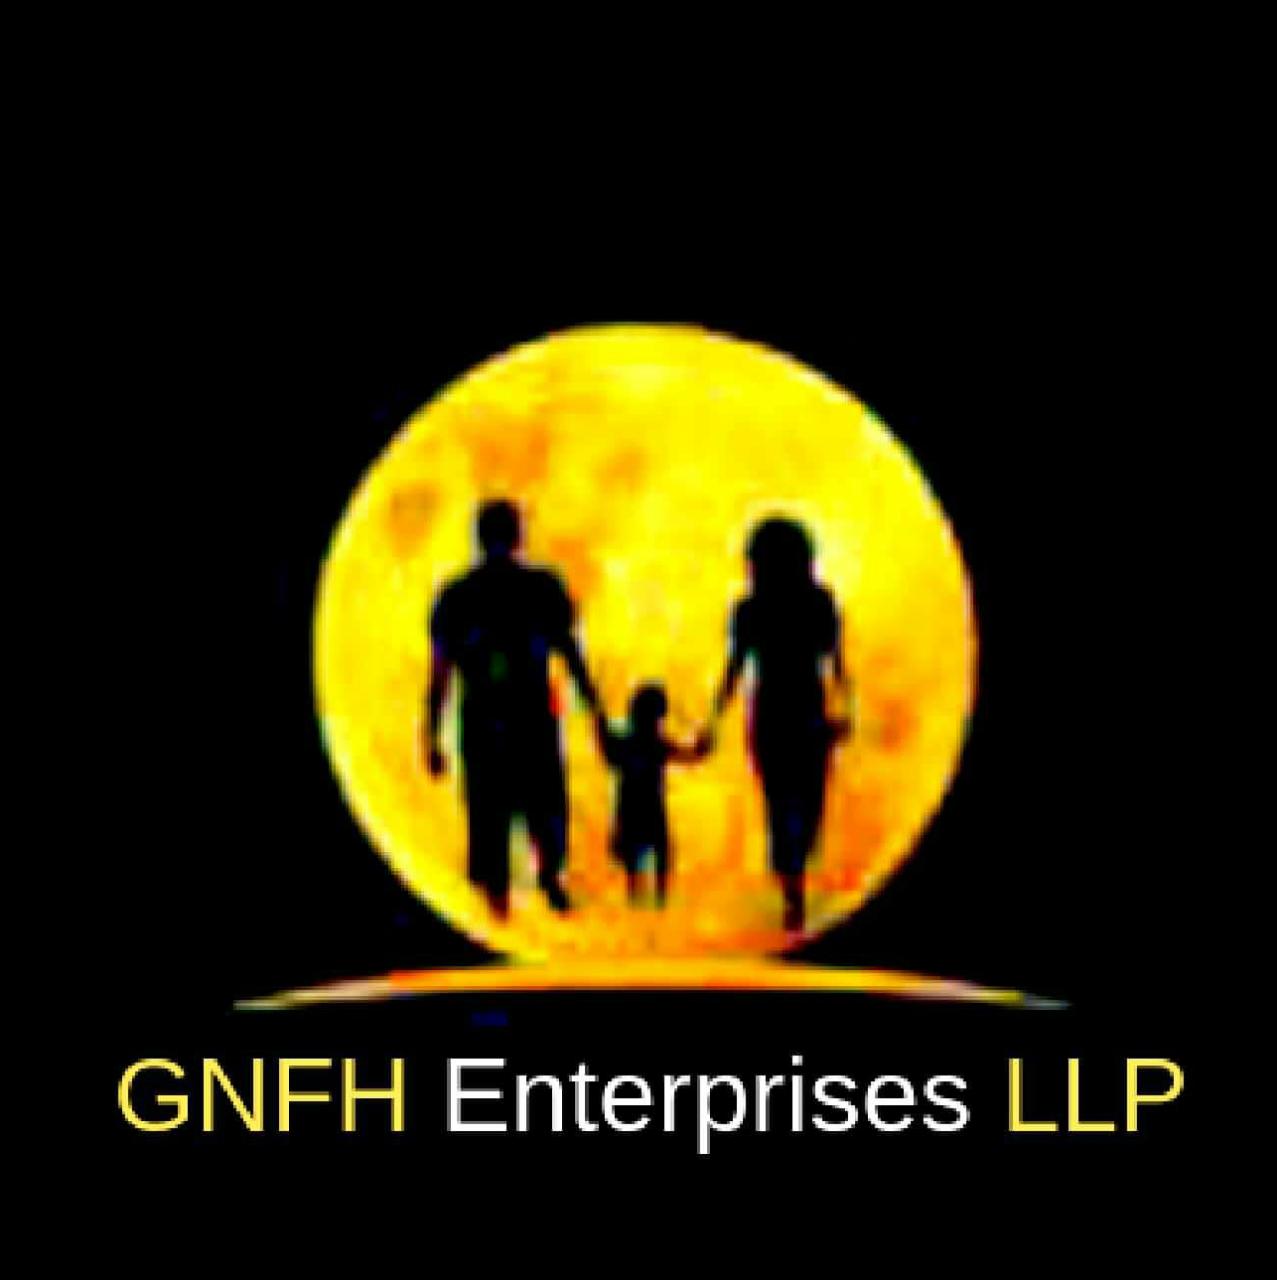 GNFH Enterprises LLP